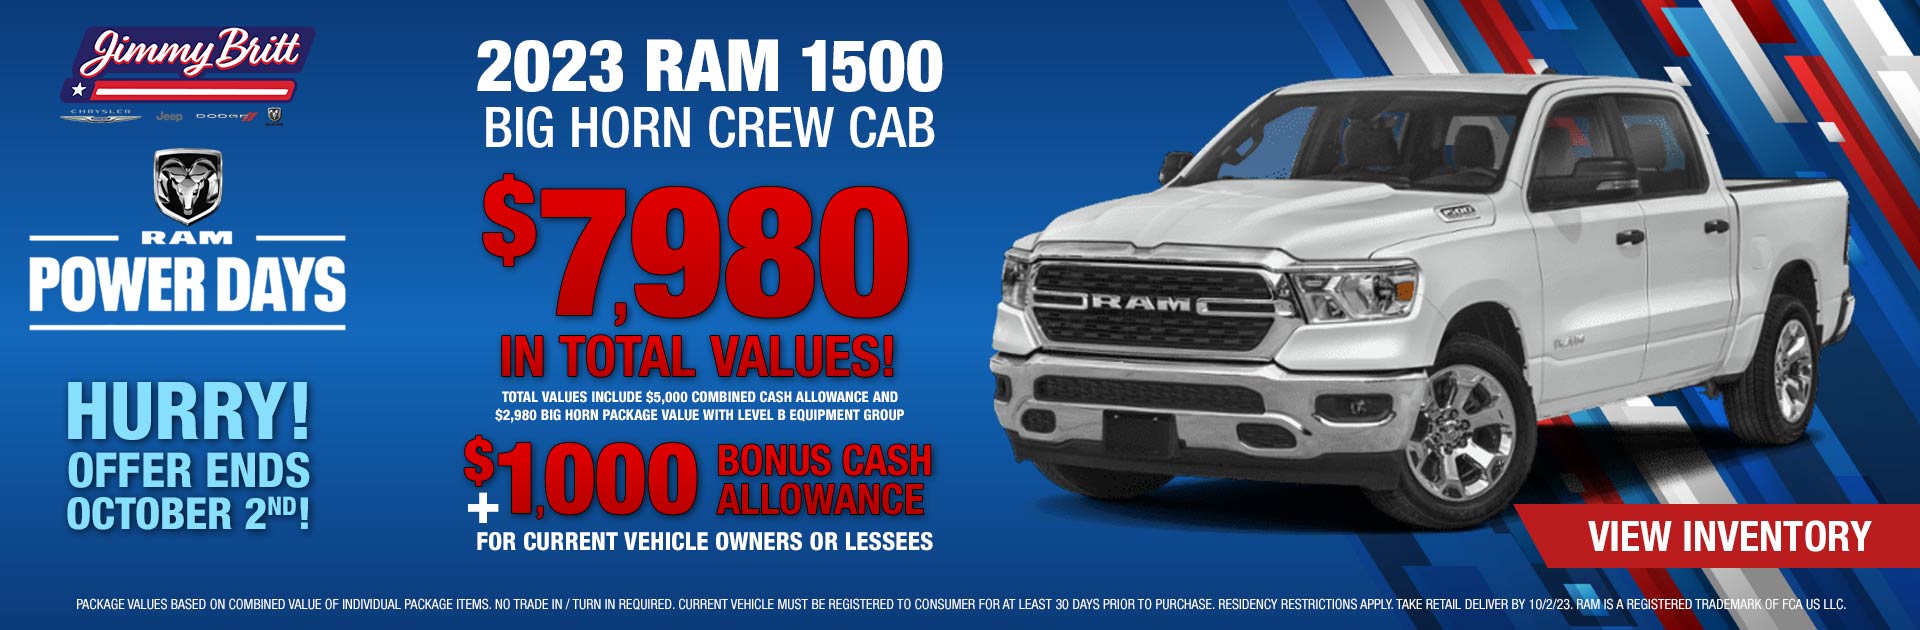 2023 RAM 1500 Big Horn Crew Cab: Up to $7,980 in total values + $1000 Bonus Cash Allowance!